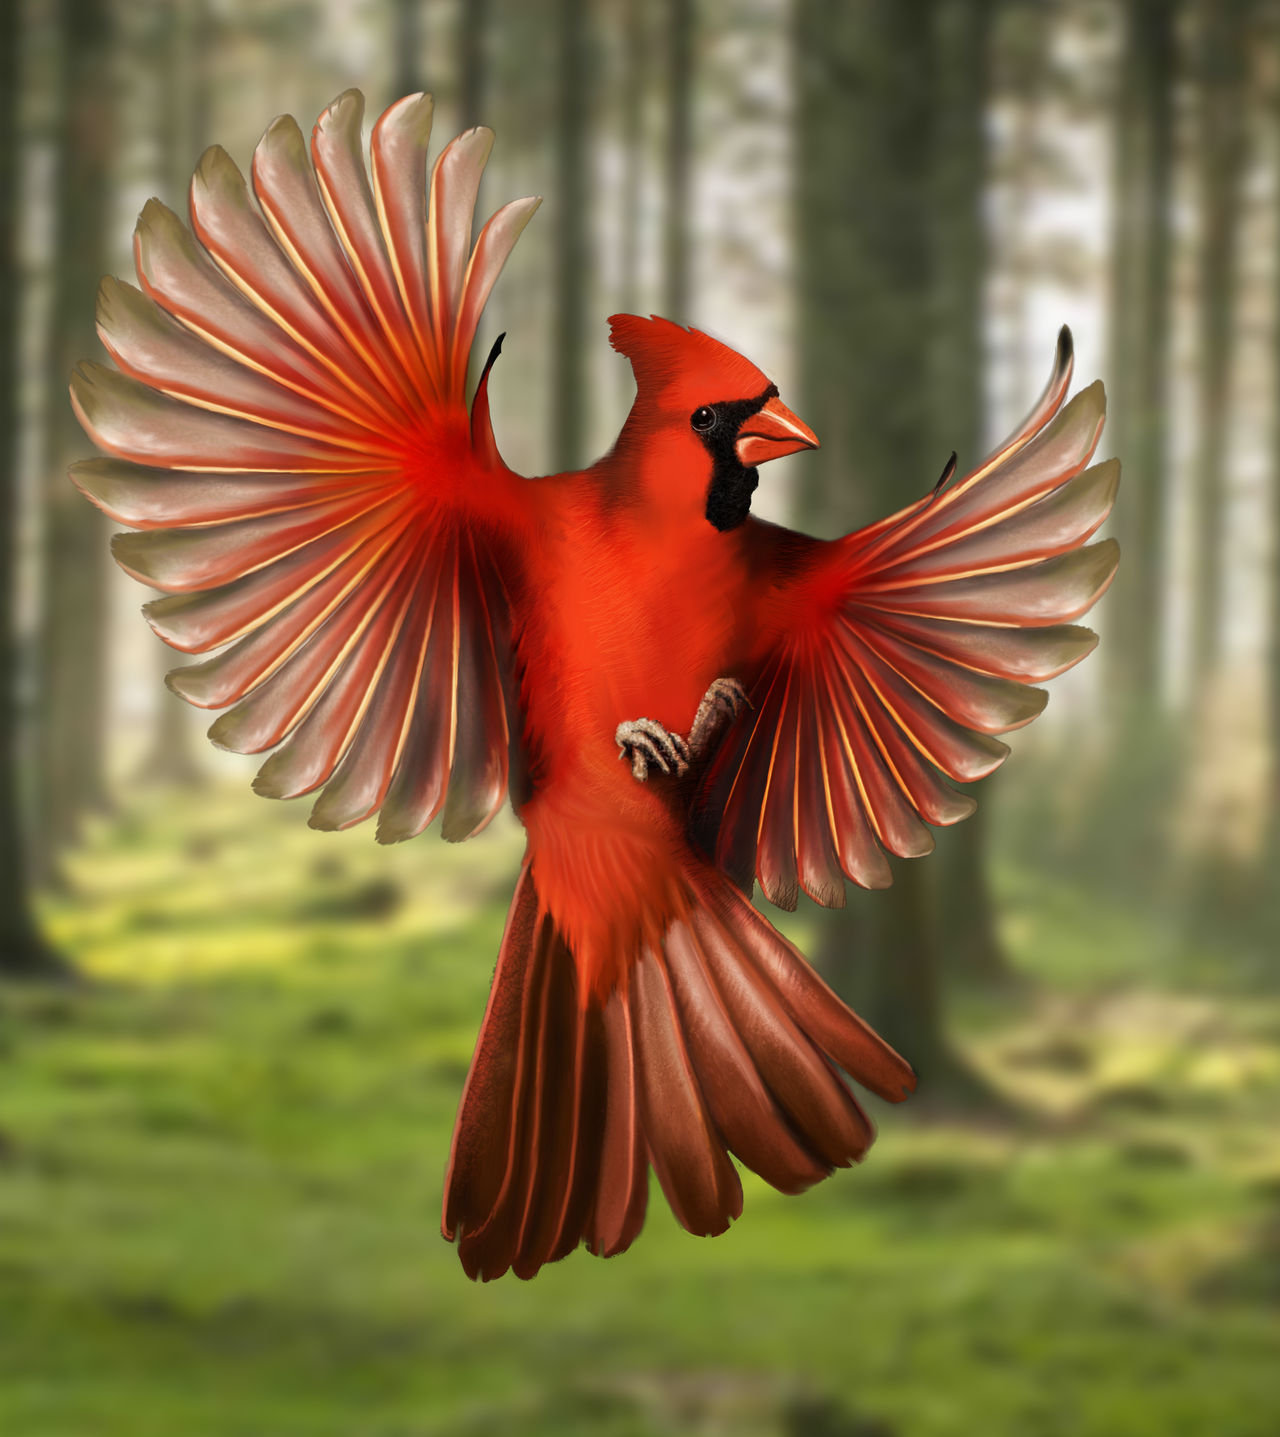 Cardinal In Flight By Djflorence On Deviantart